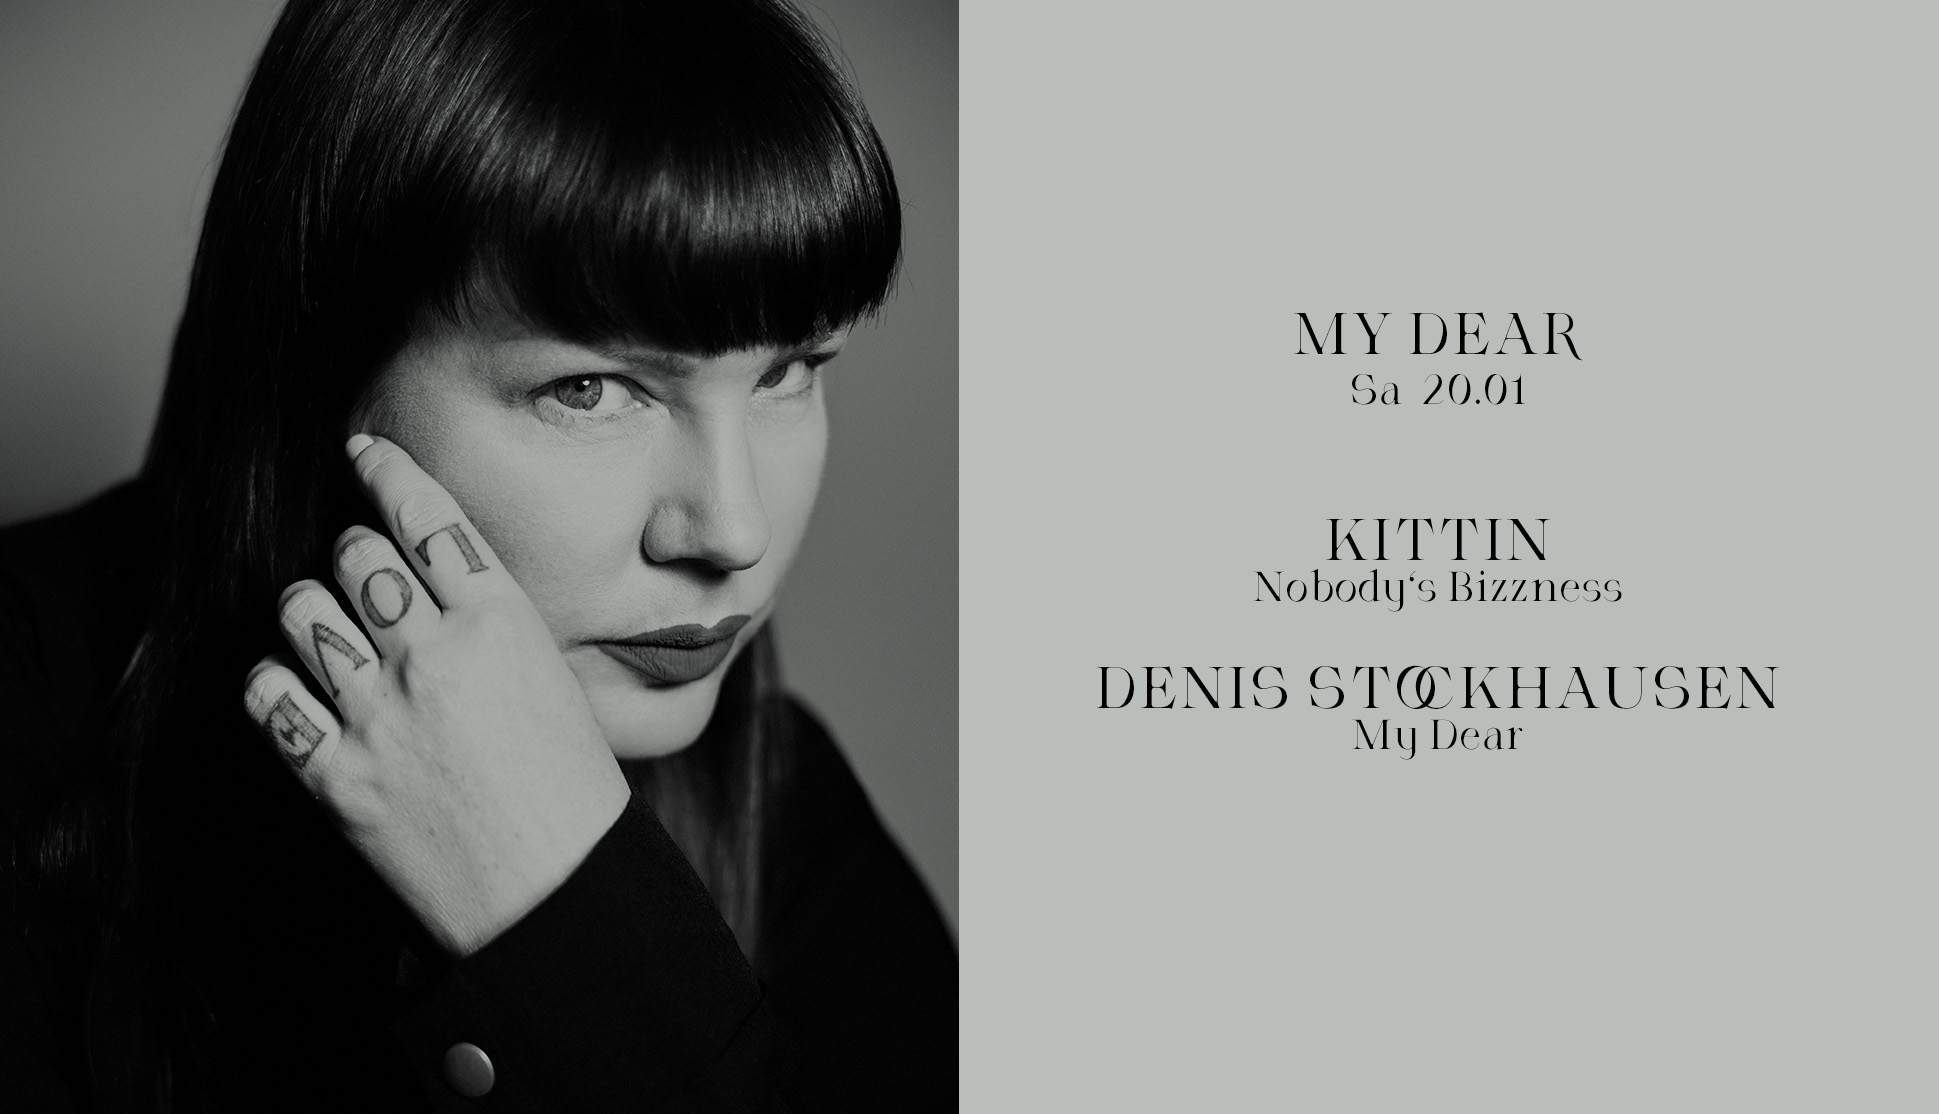 My Dear with Denis Stockhausen & Kittin - フライヤー表